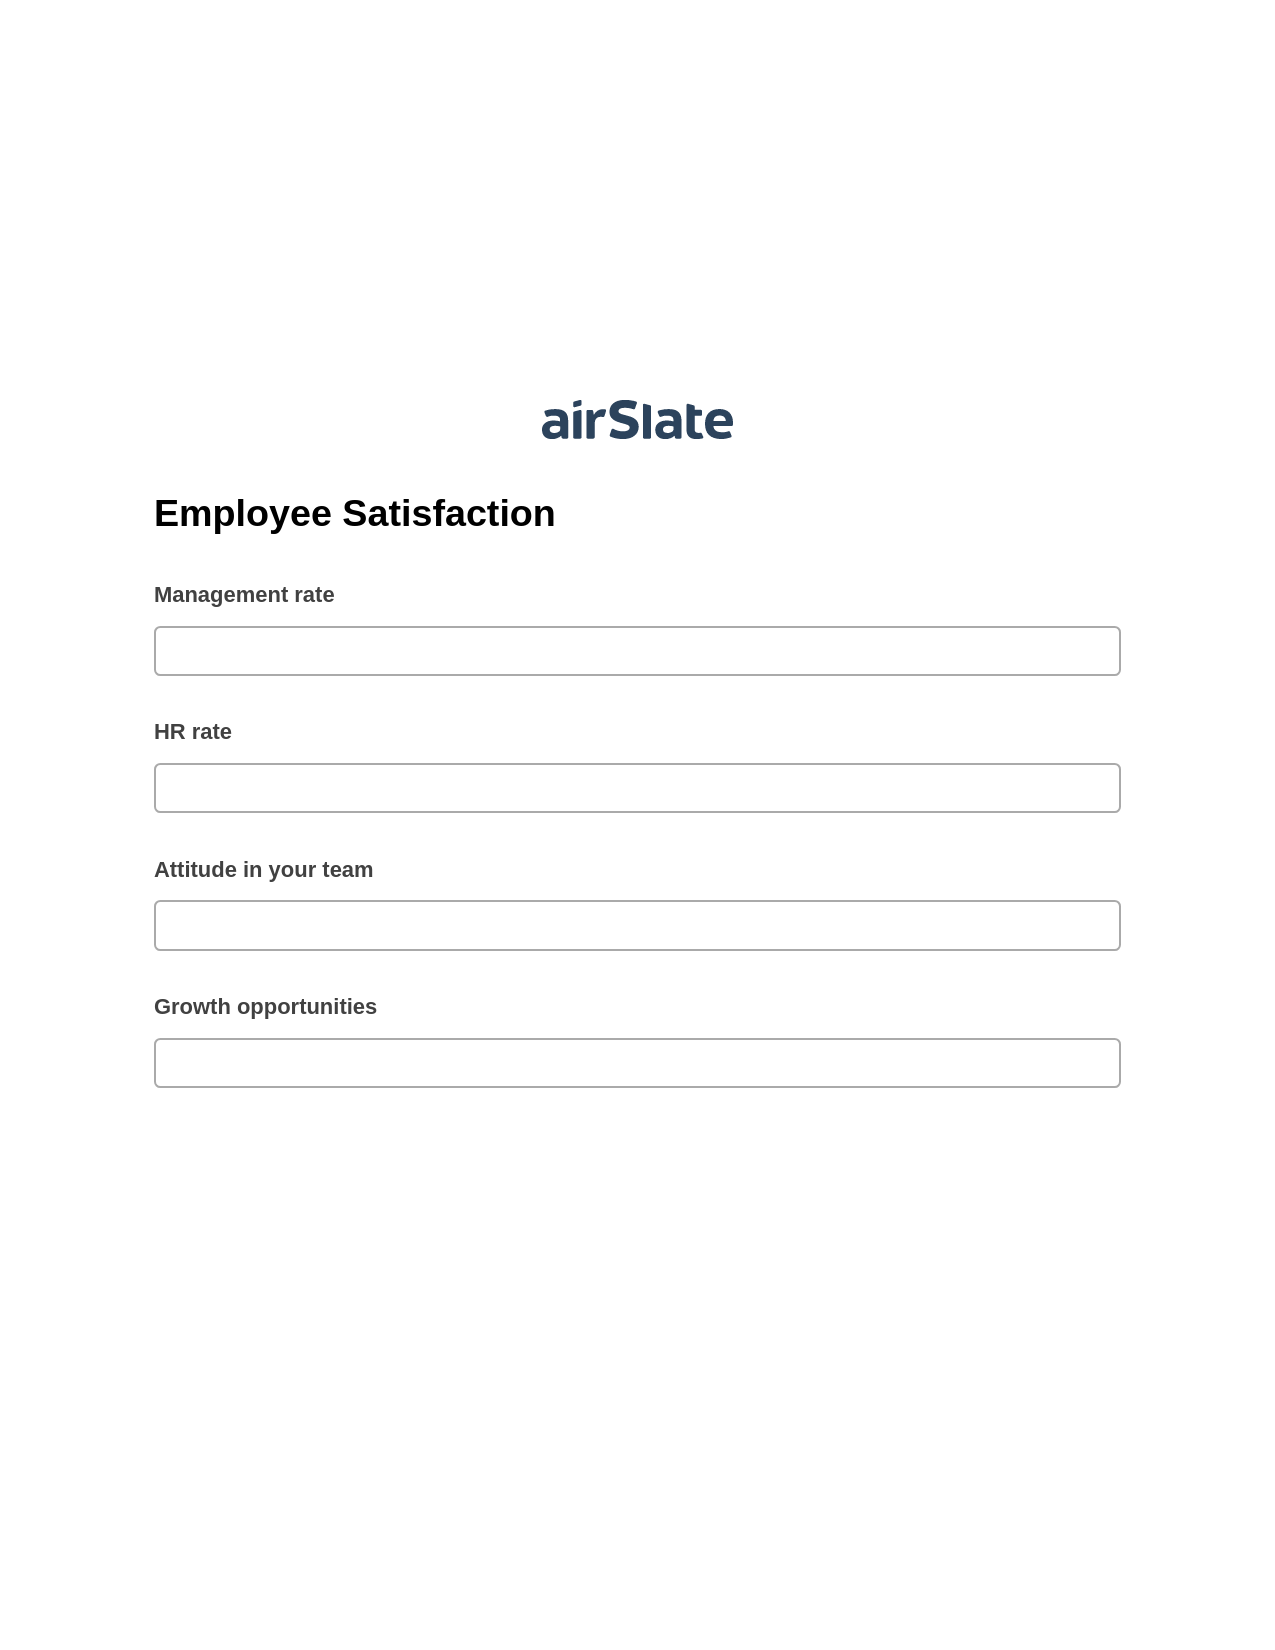 Multirole Employee Satisfaction Pre-fill from CSV File Bot, Update NetSuite Records Bot, Webhook Postfinish Bot